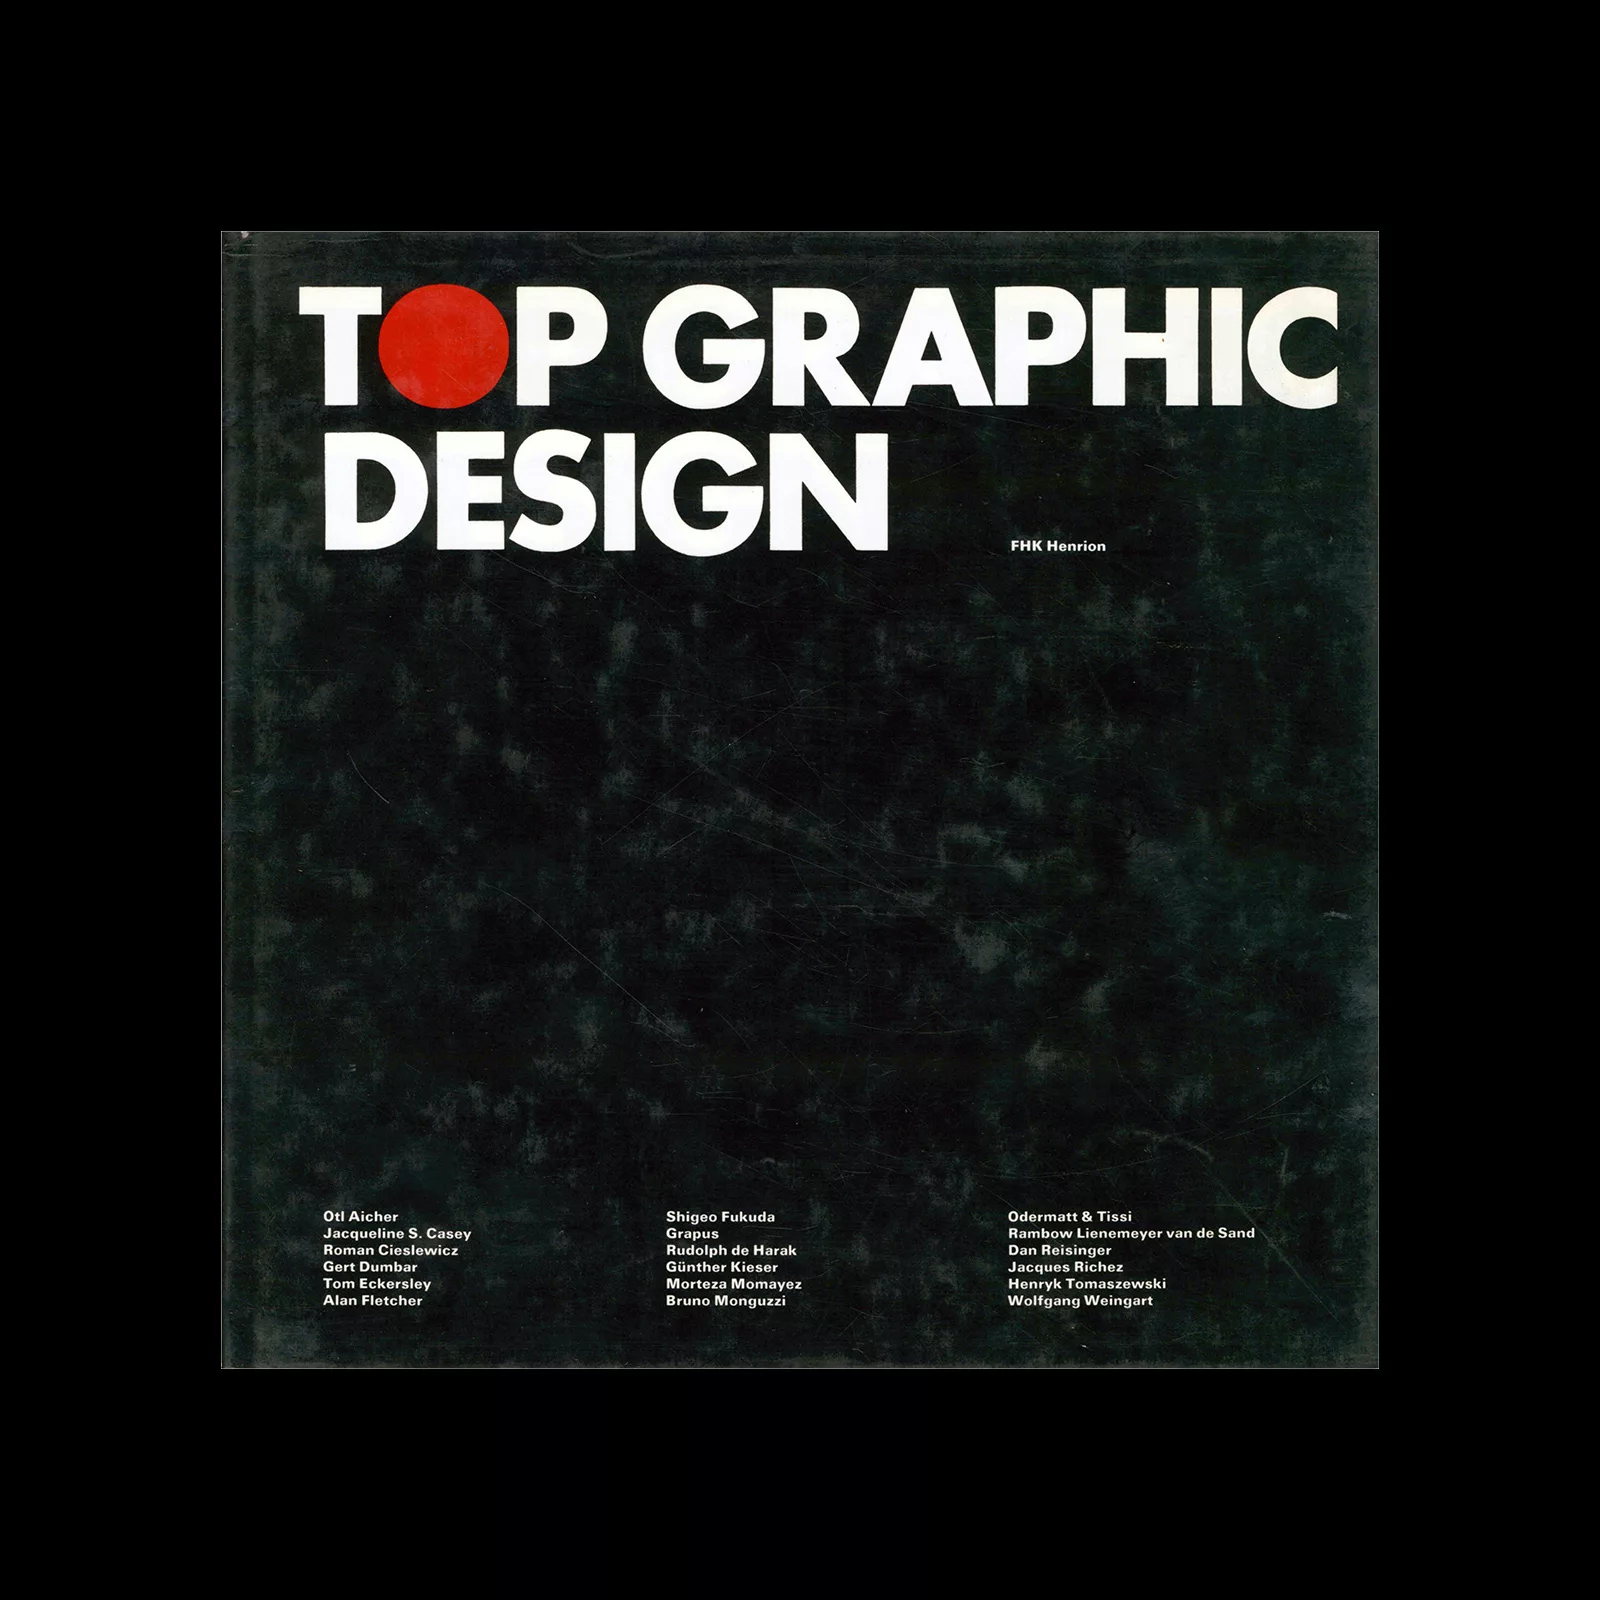 Top Graphic Design, ABC Edition, 1983